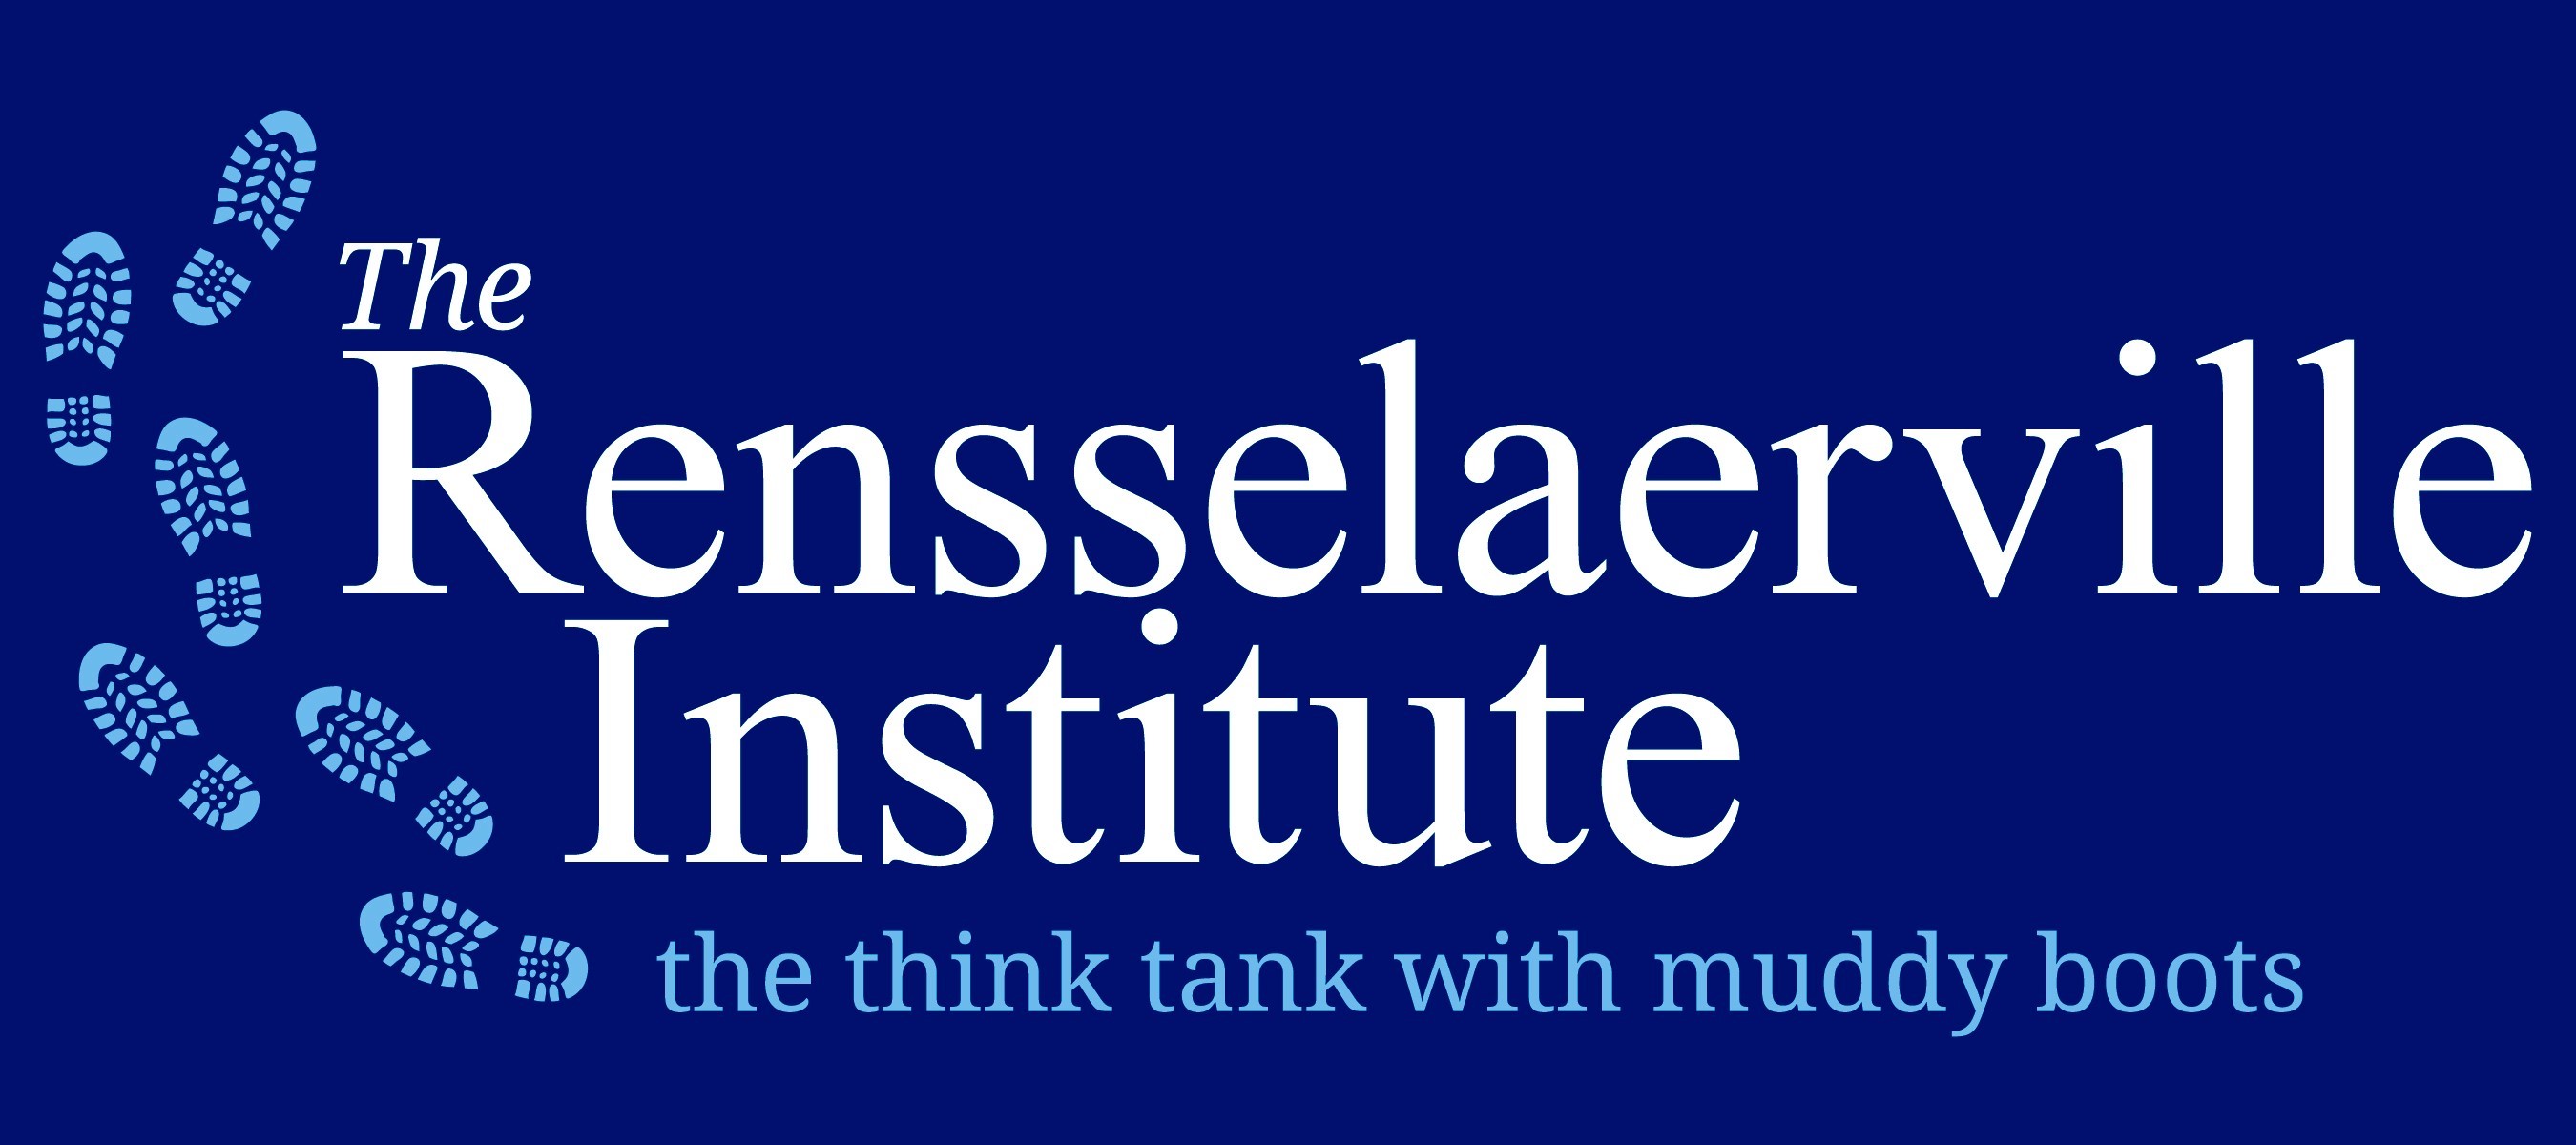 The Rensselaerville Institute logo